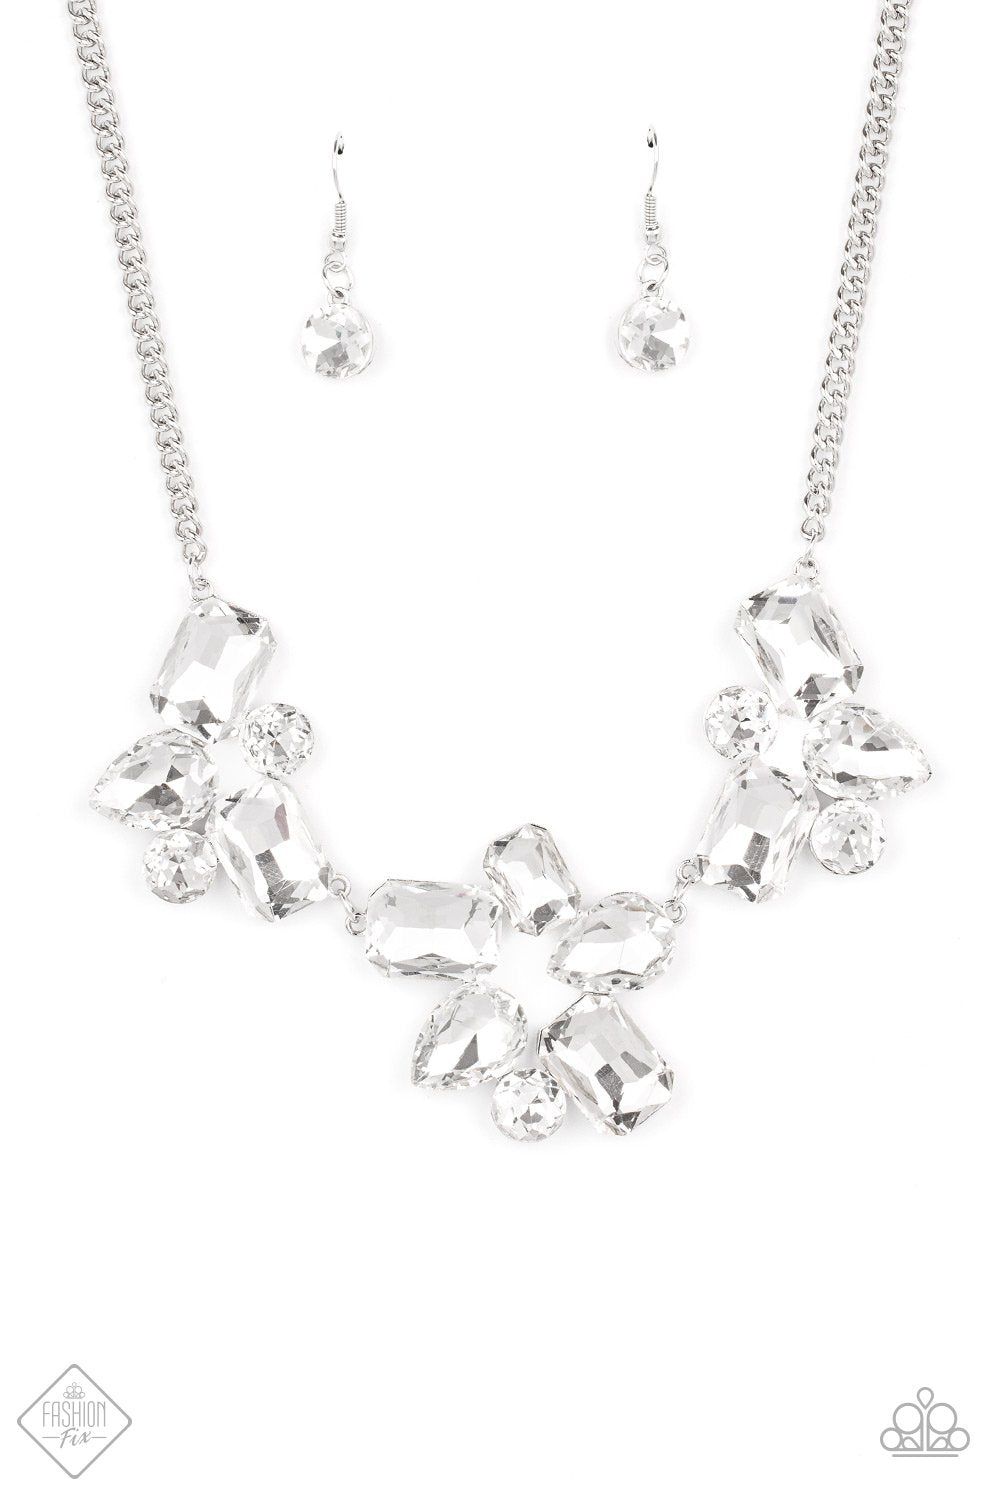 Galactic Goddess White Rhinestone Necklace - Paparazzi Accessories - lightbox -CarasShop.com - $5 Jewelry by Cara Jewels